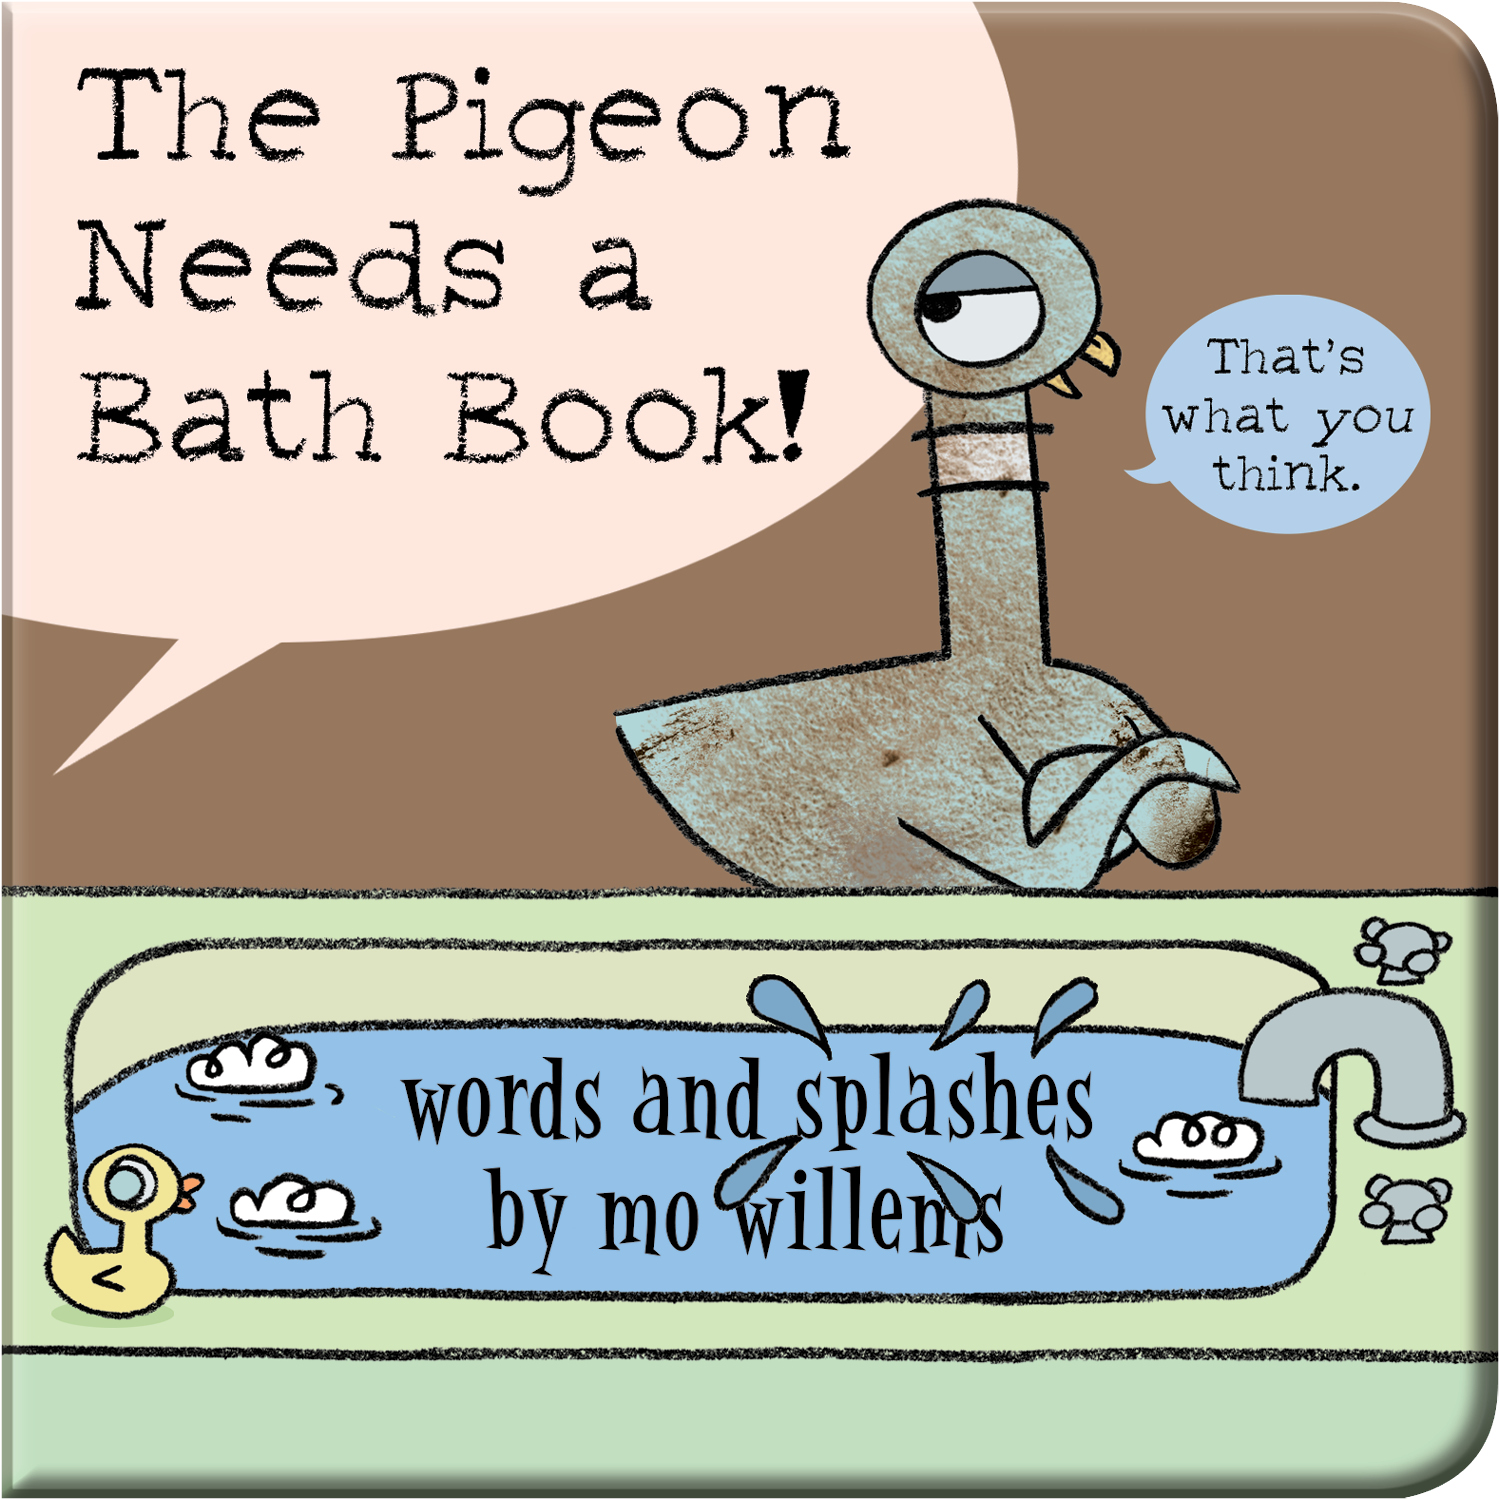 The Pigeon Needs a Bath Book